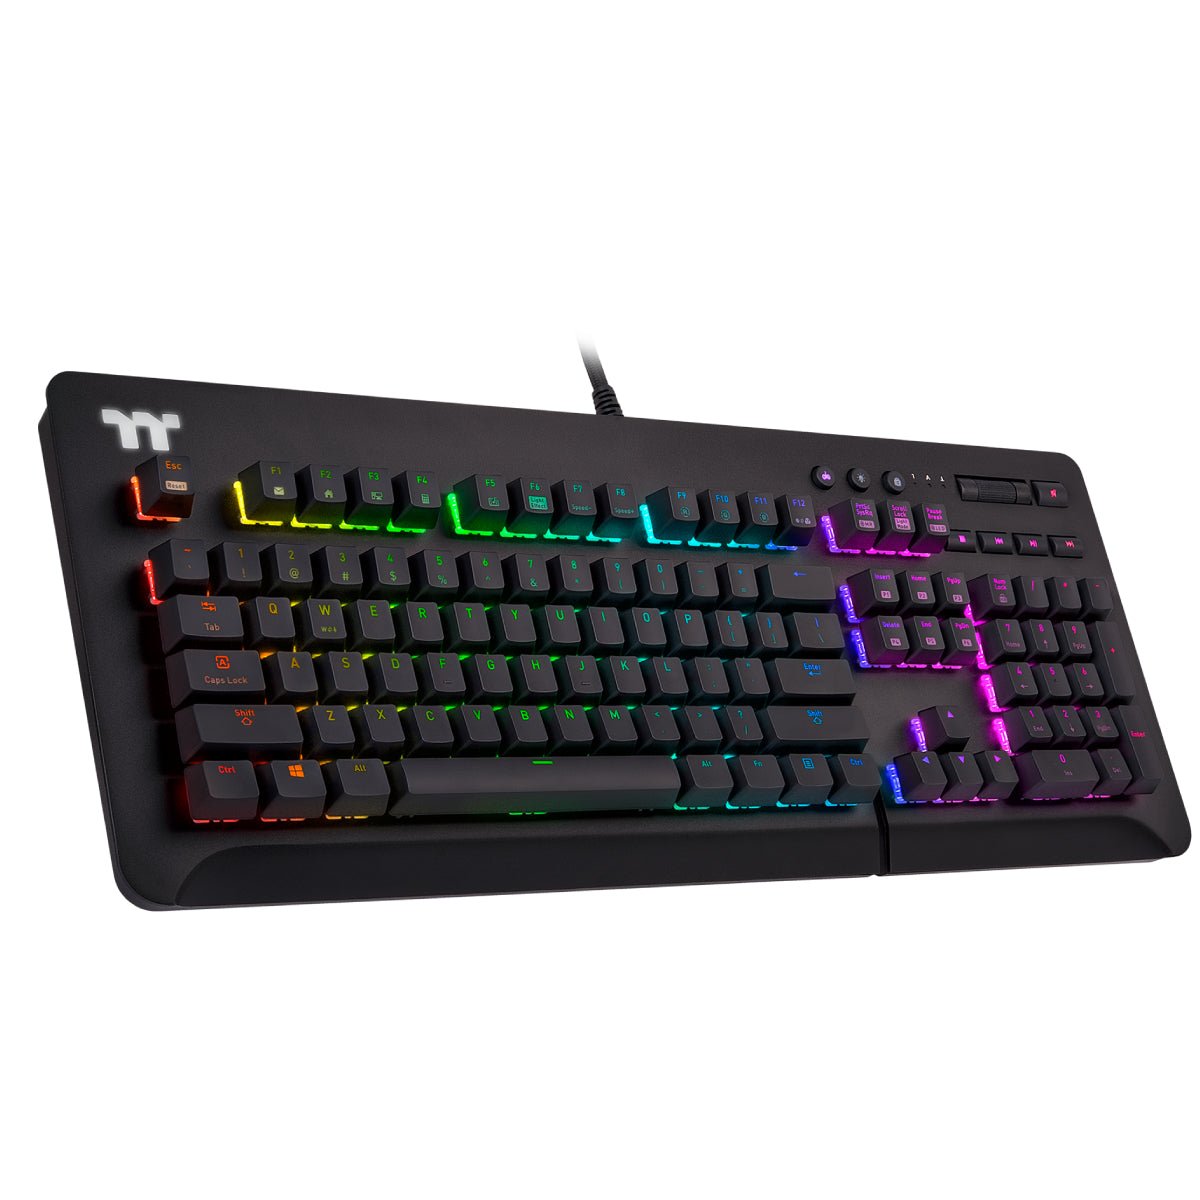 Thermaltake Level 20 GT RGB Cherry MX Blue Switch Gaming Keyboard - Store 974 | ستور ٩٧٤